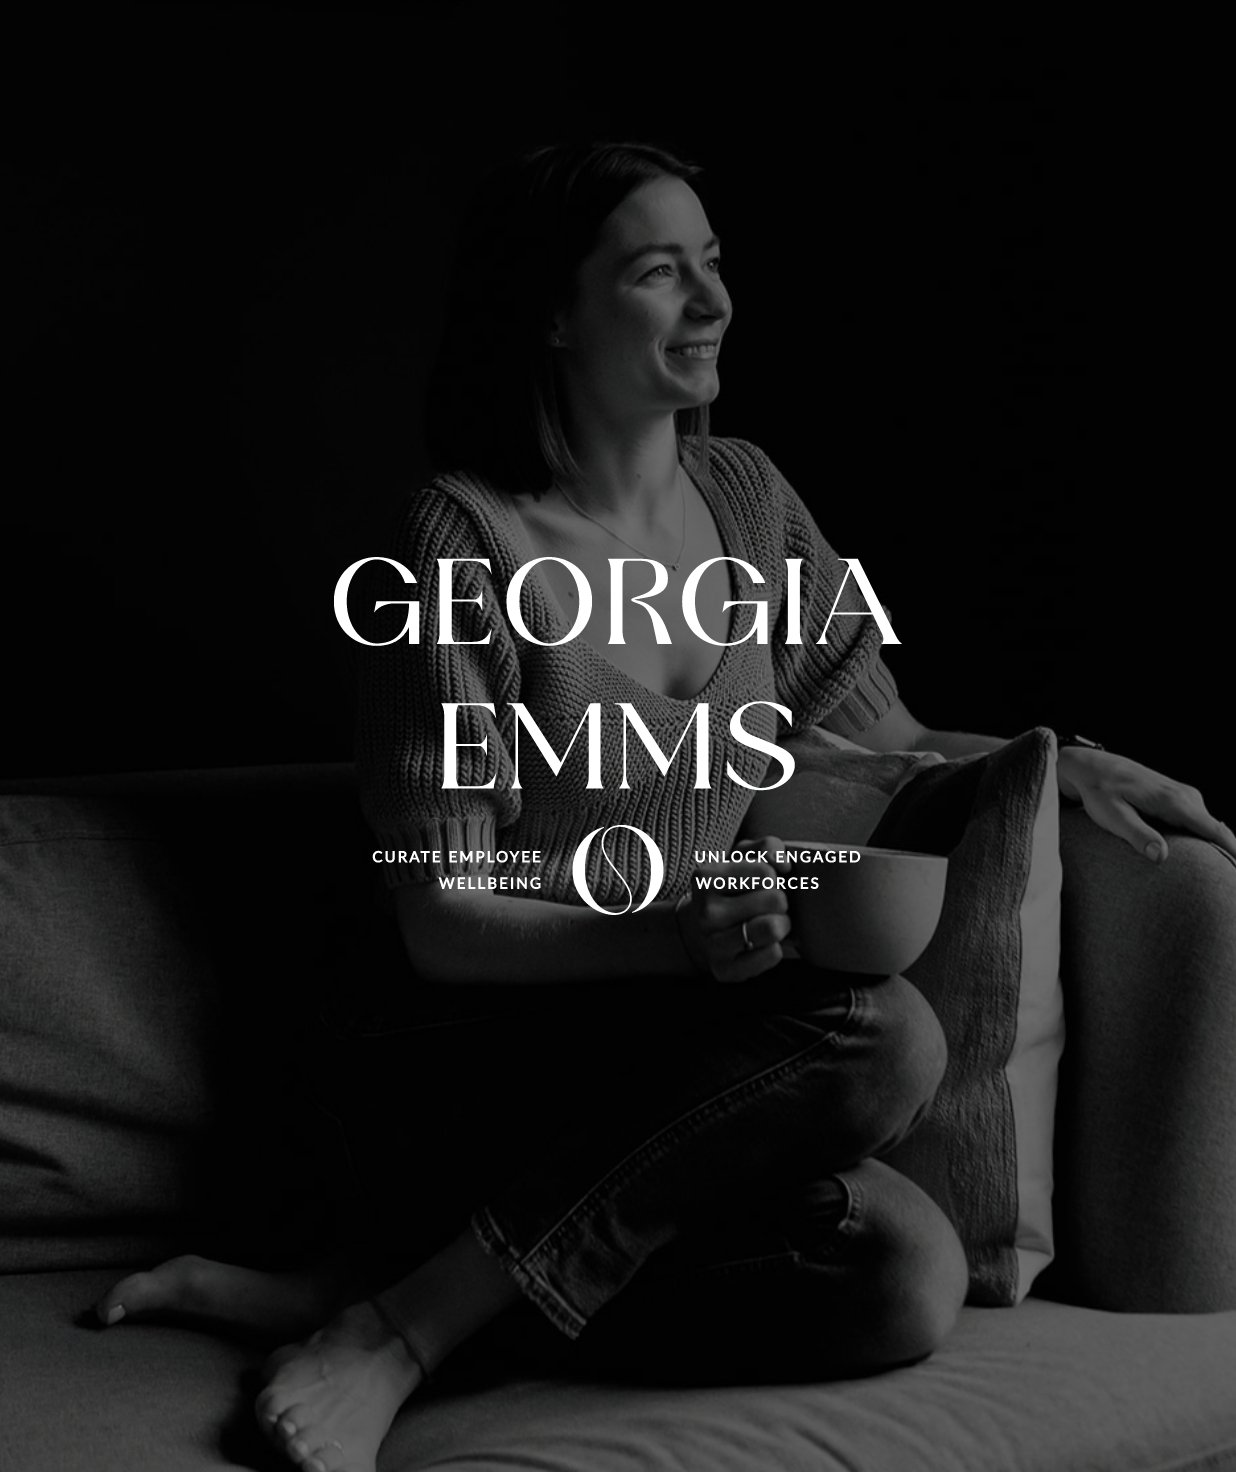 georgia-emms-logo.jpg